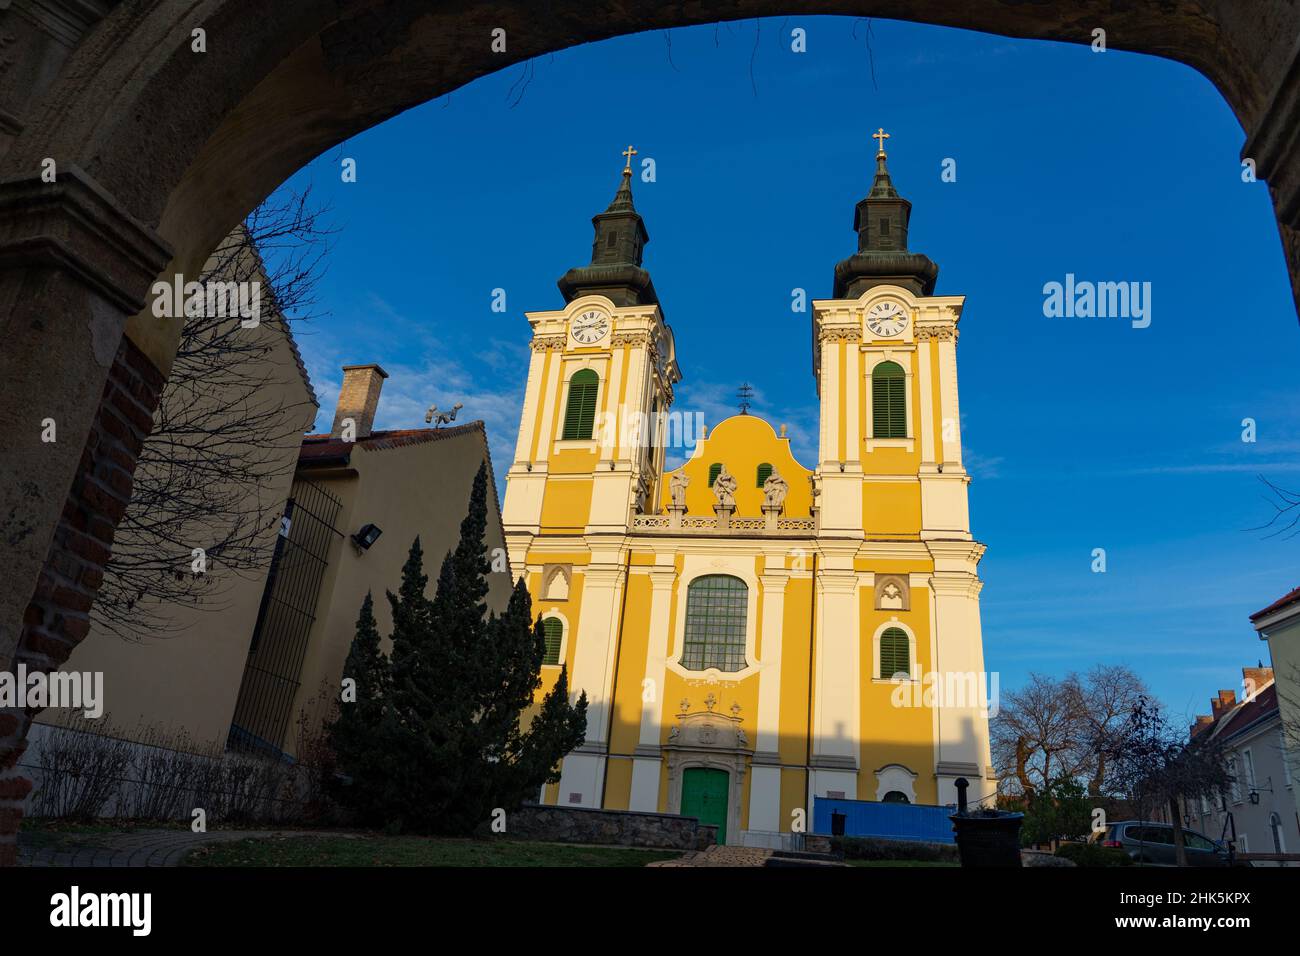 Saint Imre cathedral of Szekesfehervar Hungary with an arch gate Stock Photo